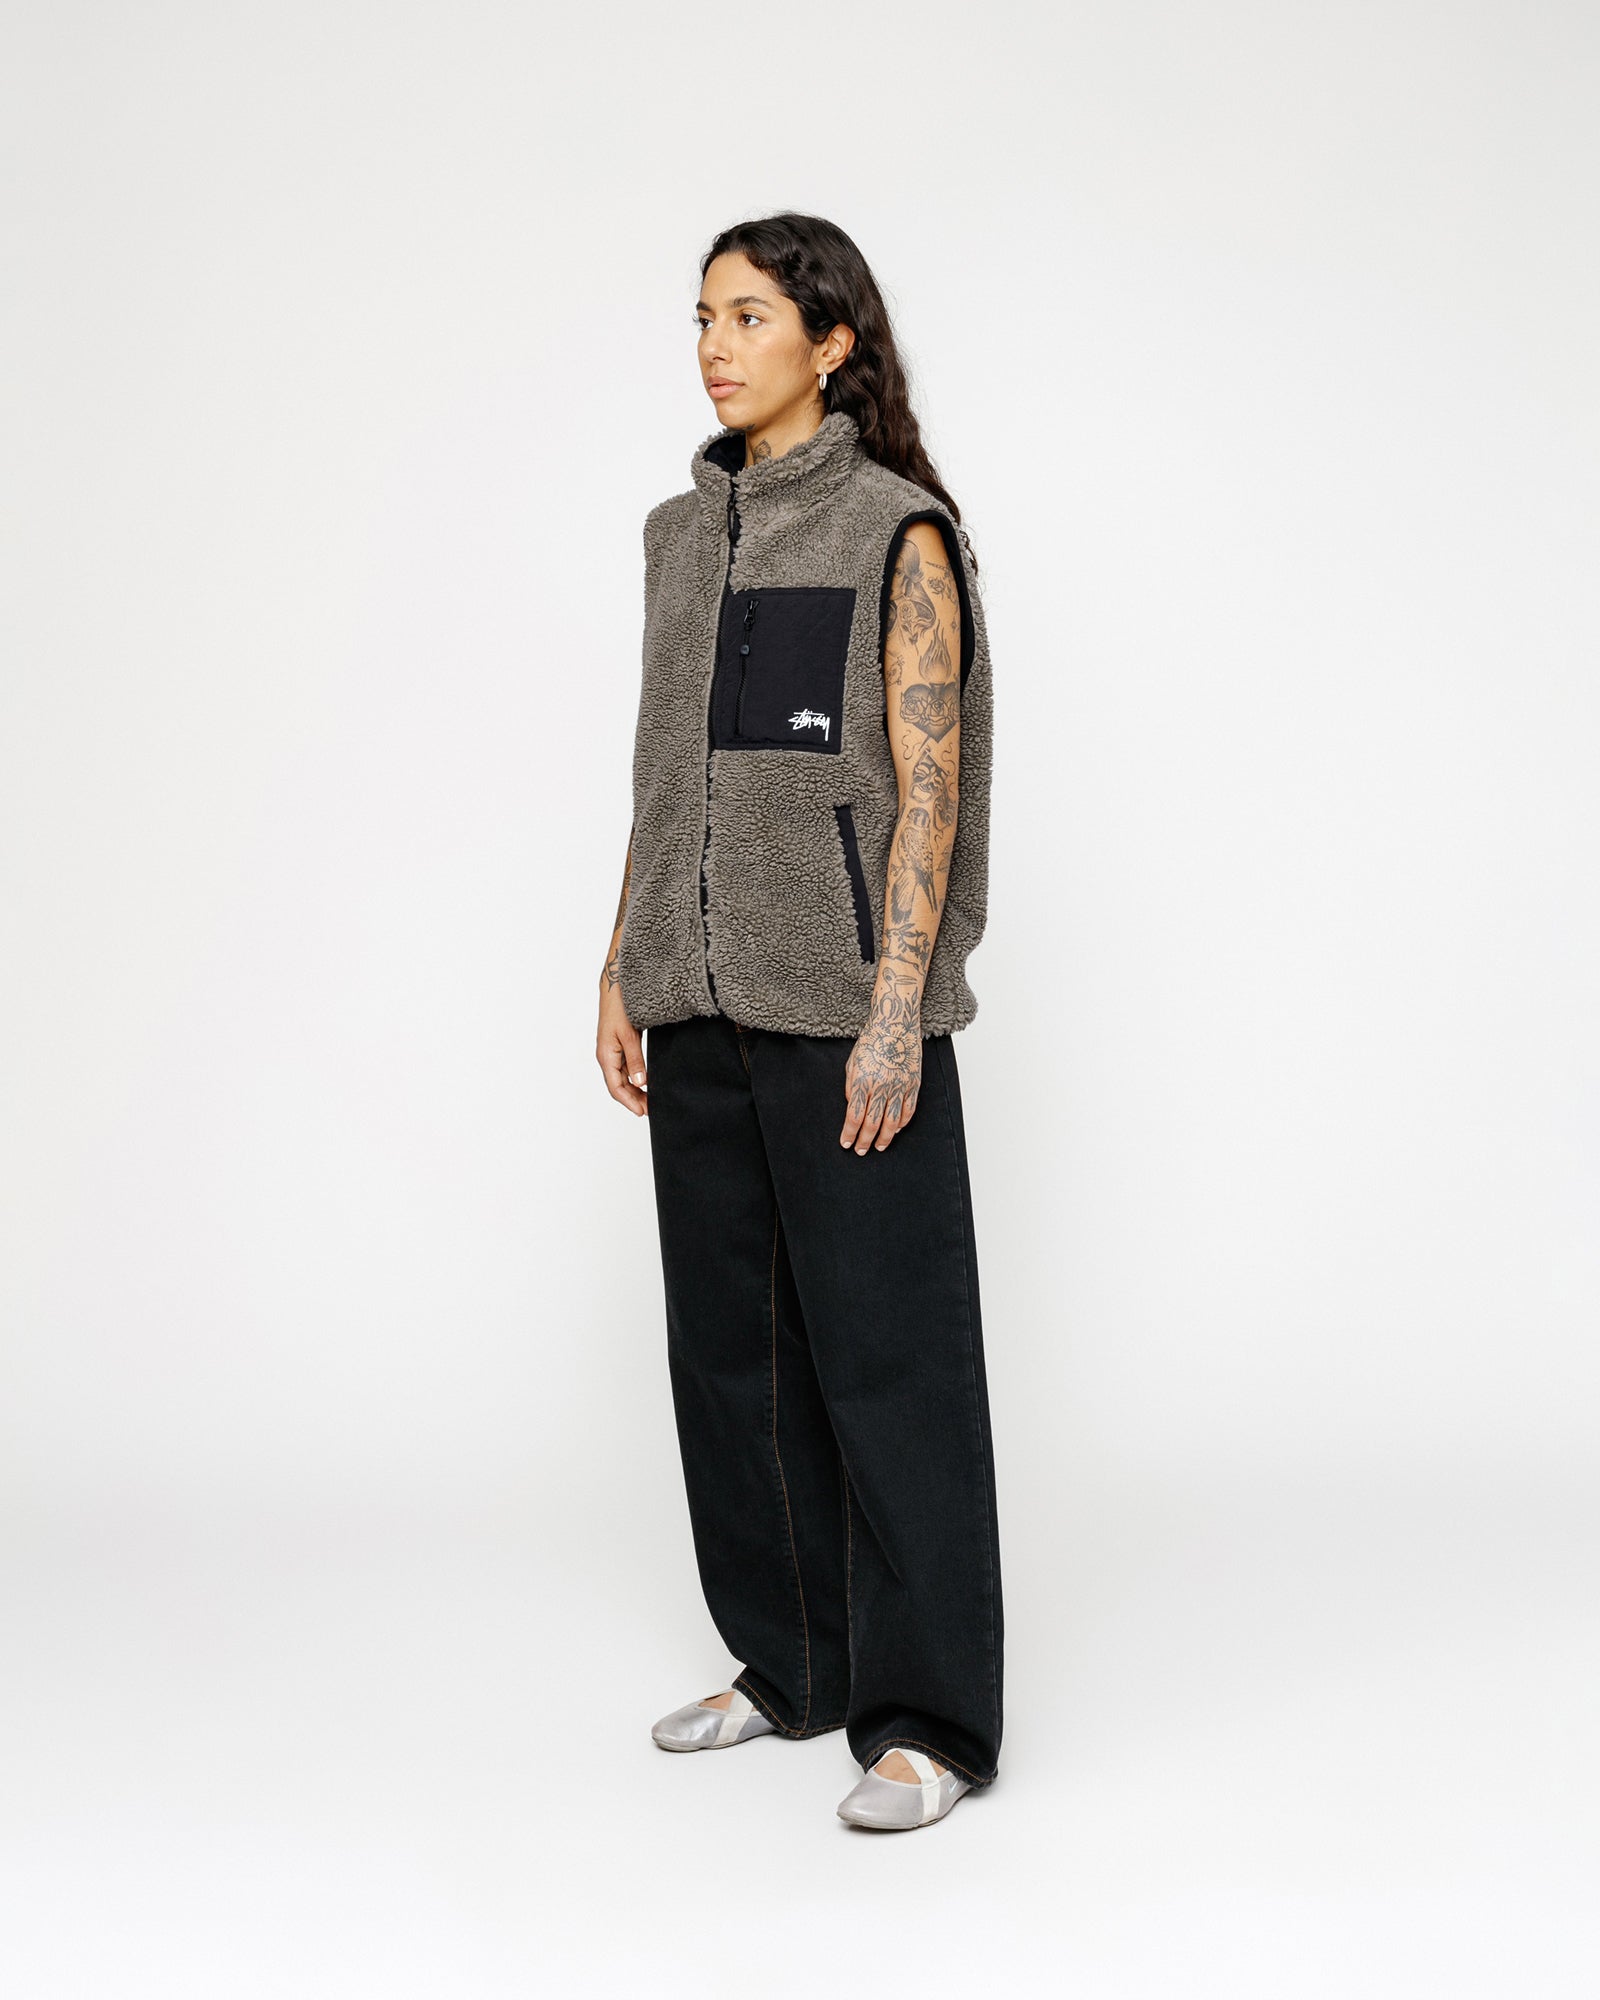 Sherpa Reversible Vest Stone Outerwear